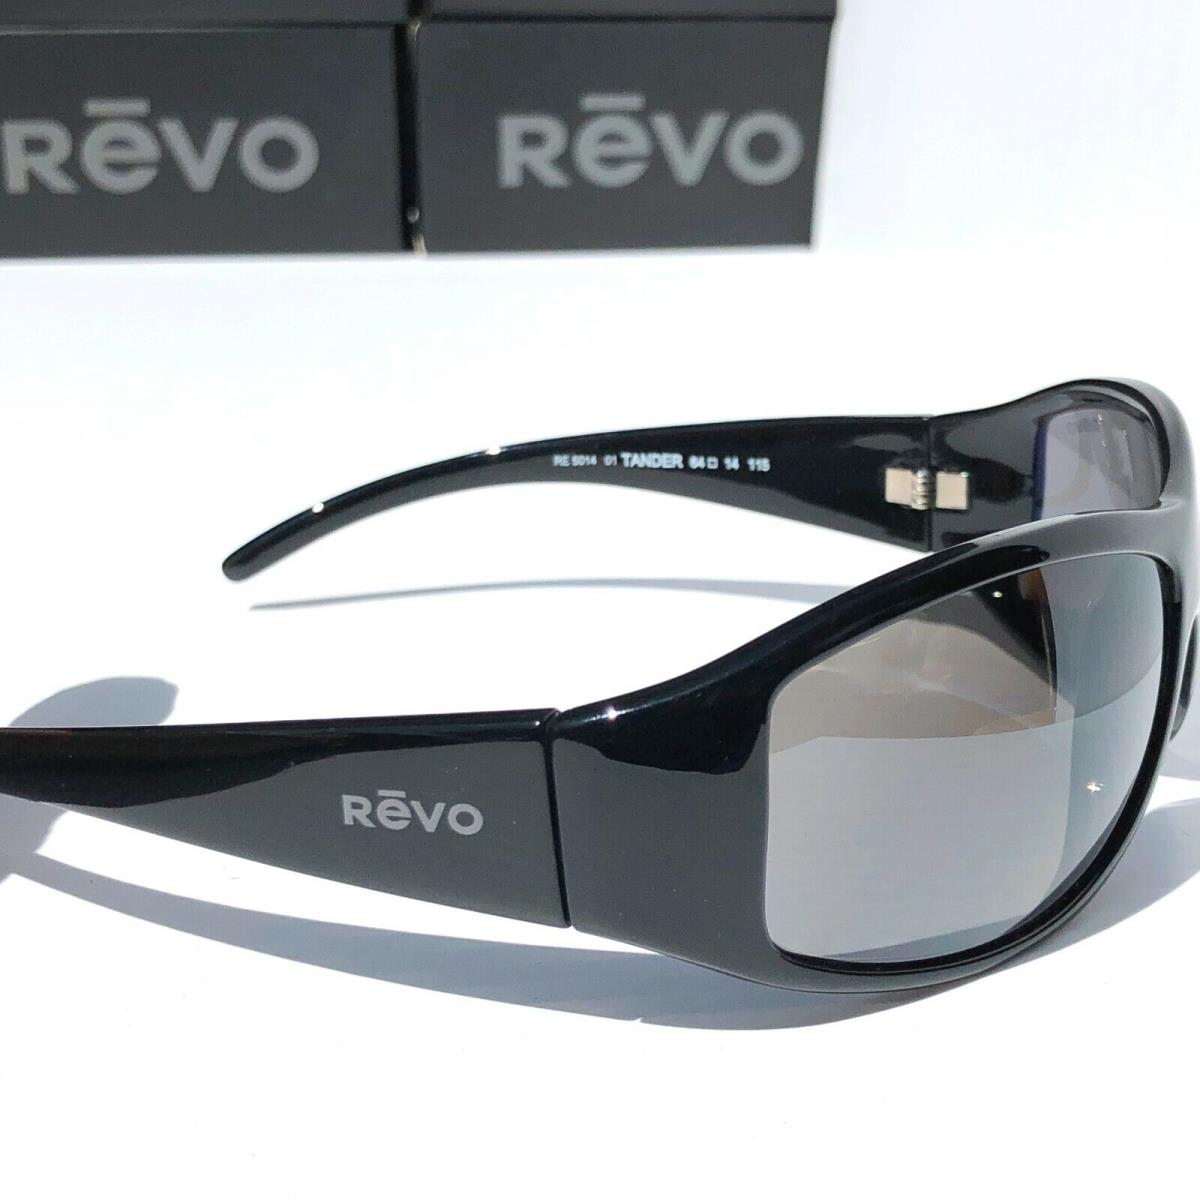 Revo sunglasses Tander - Black Frame, Black Lens